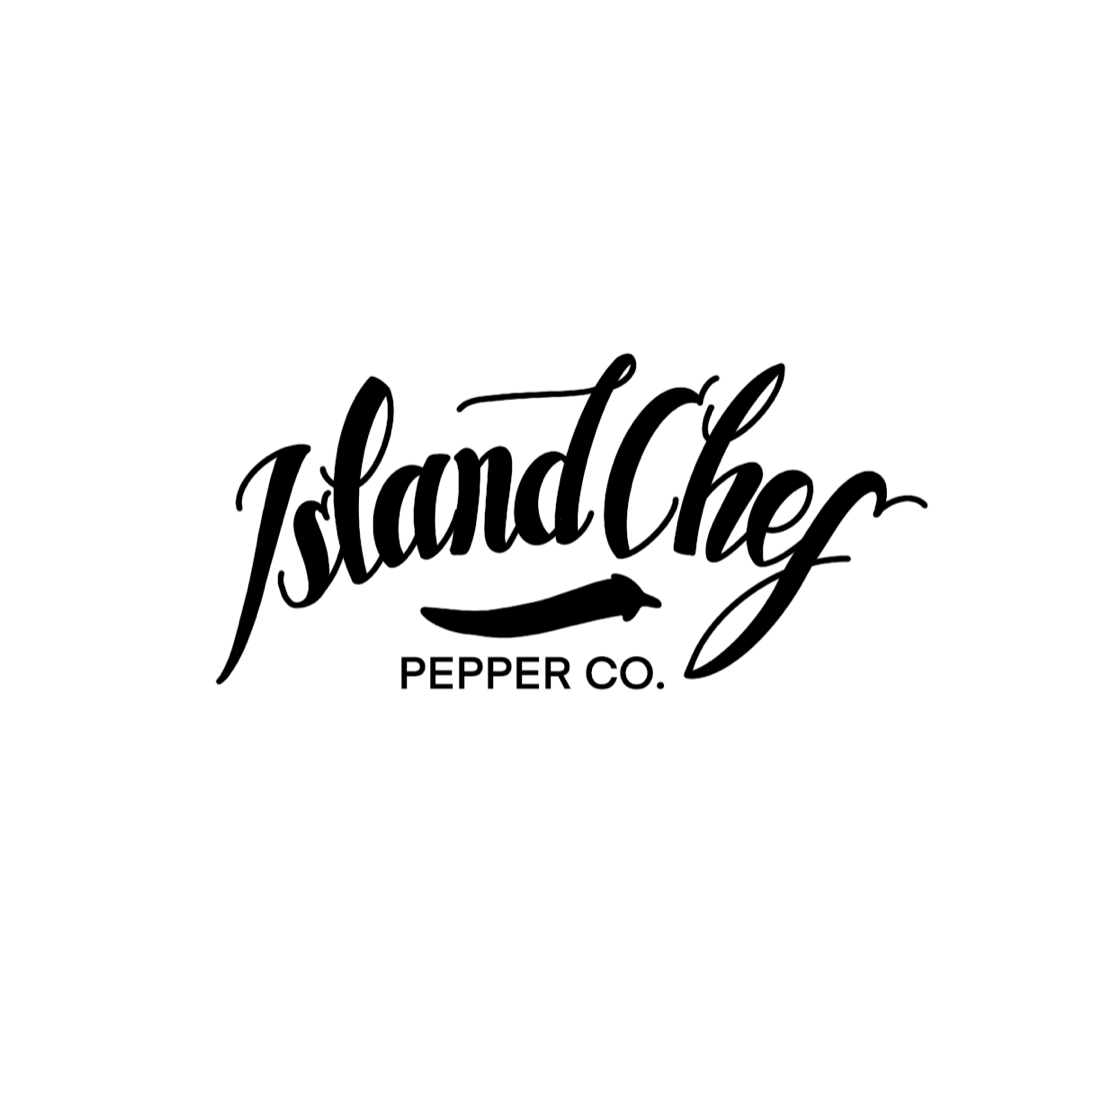 Island Chef Pepper Co.png